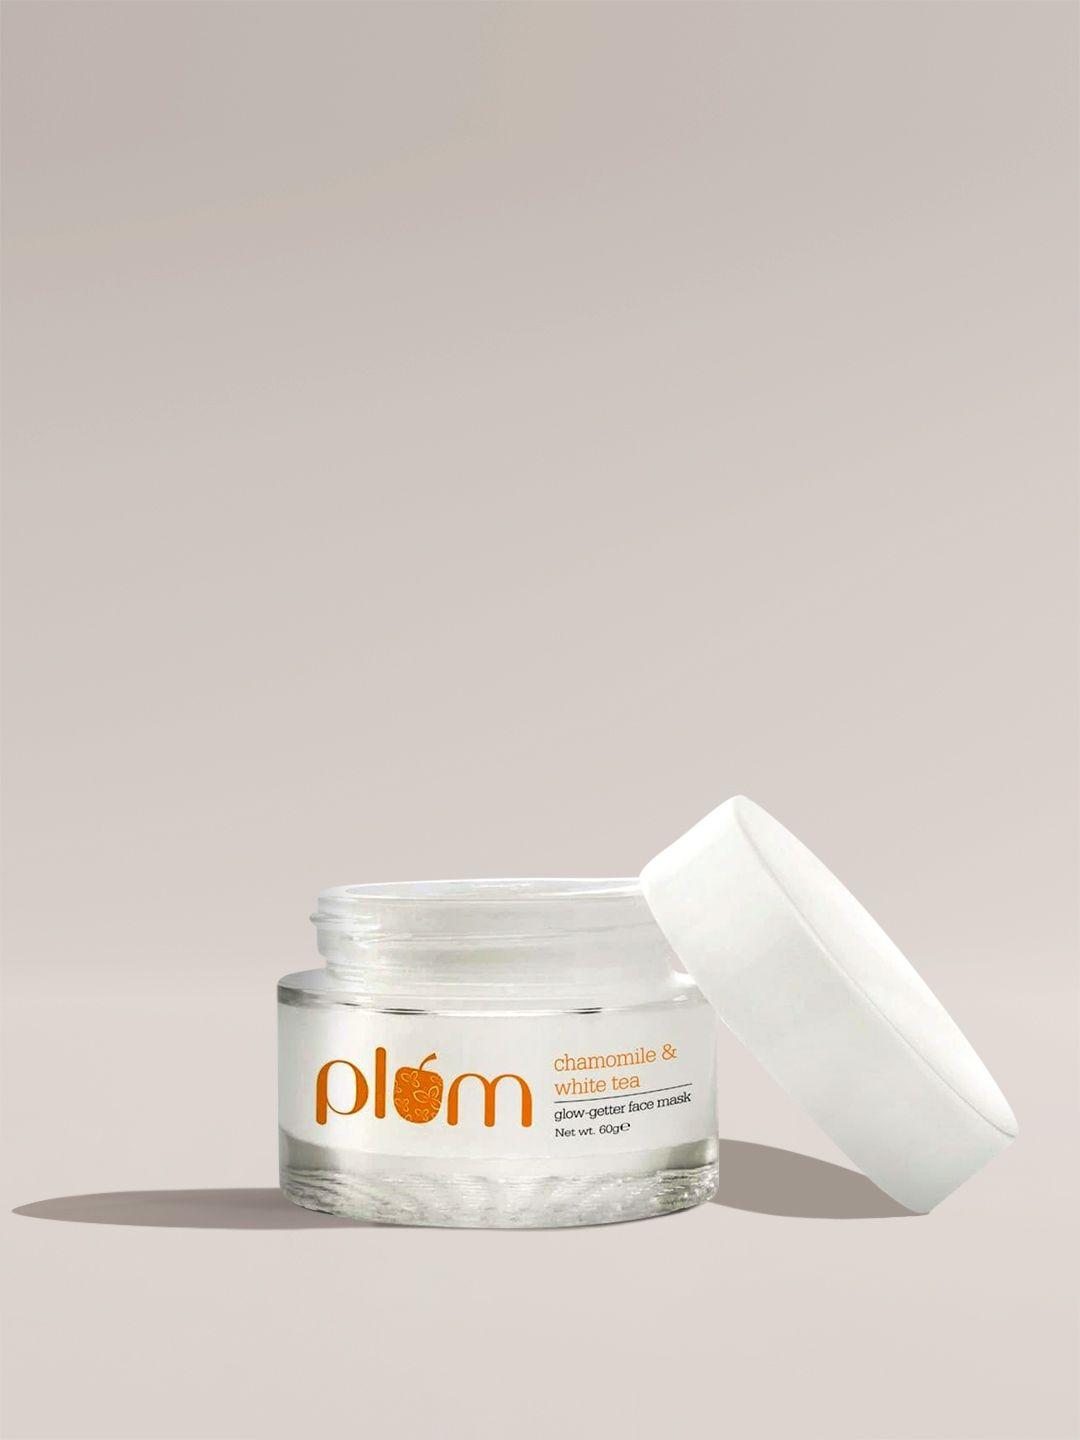 plum chamomile white tea range glow-getter sustainable face mask 60 g